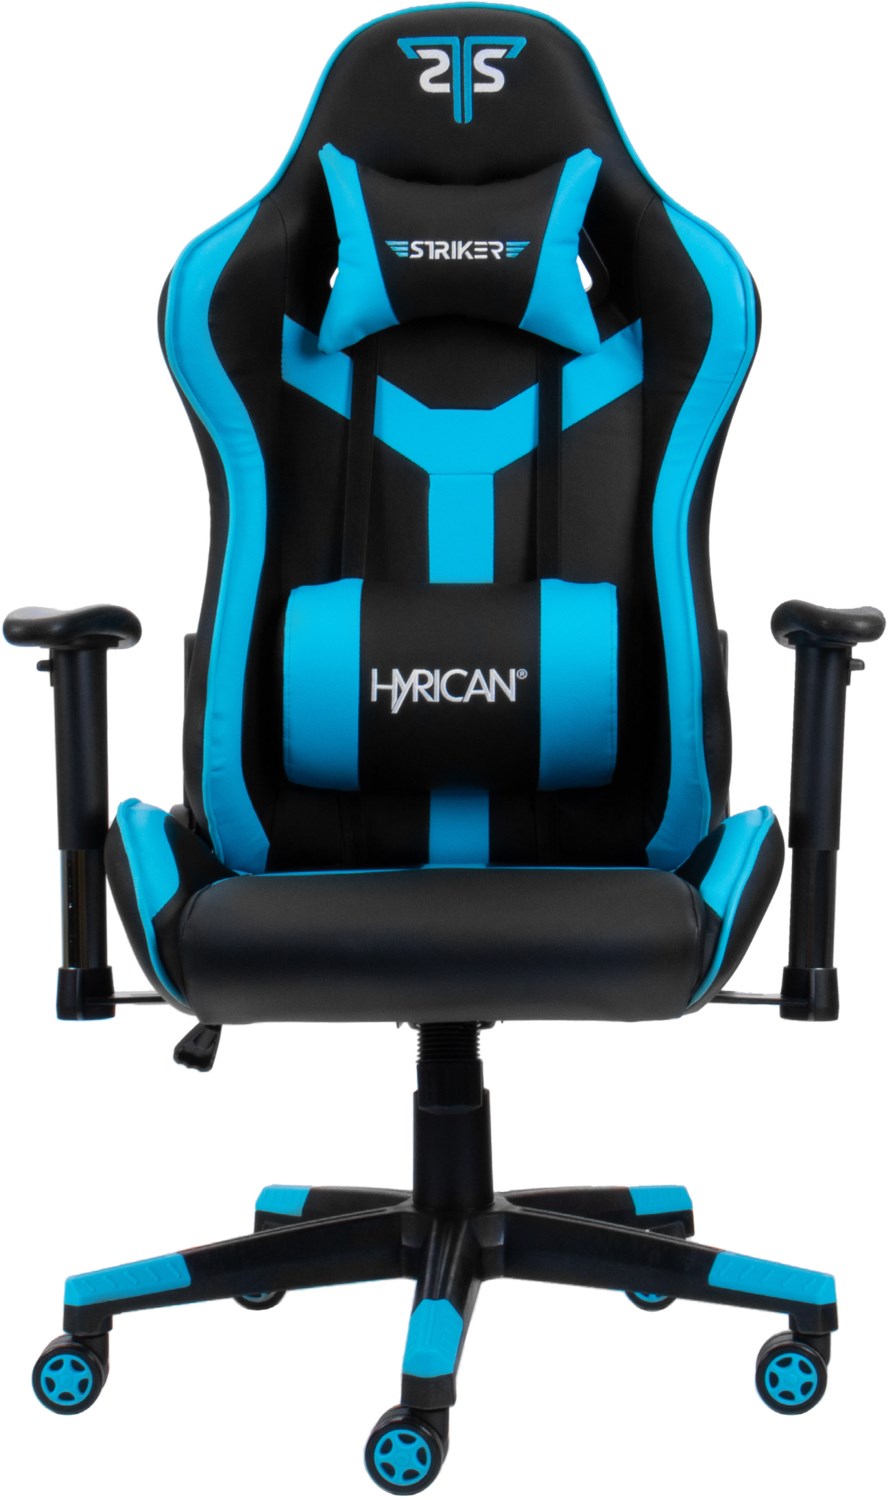 Hyrican Striker Gaming Chair | EURONICS